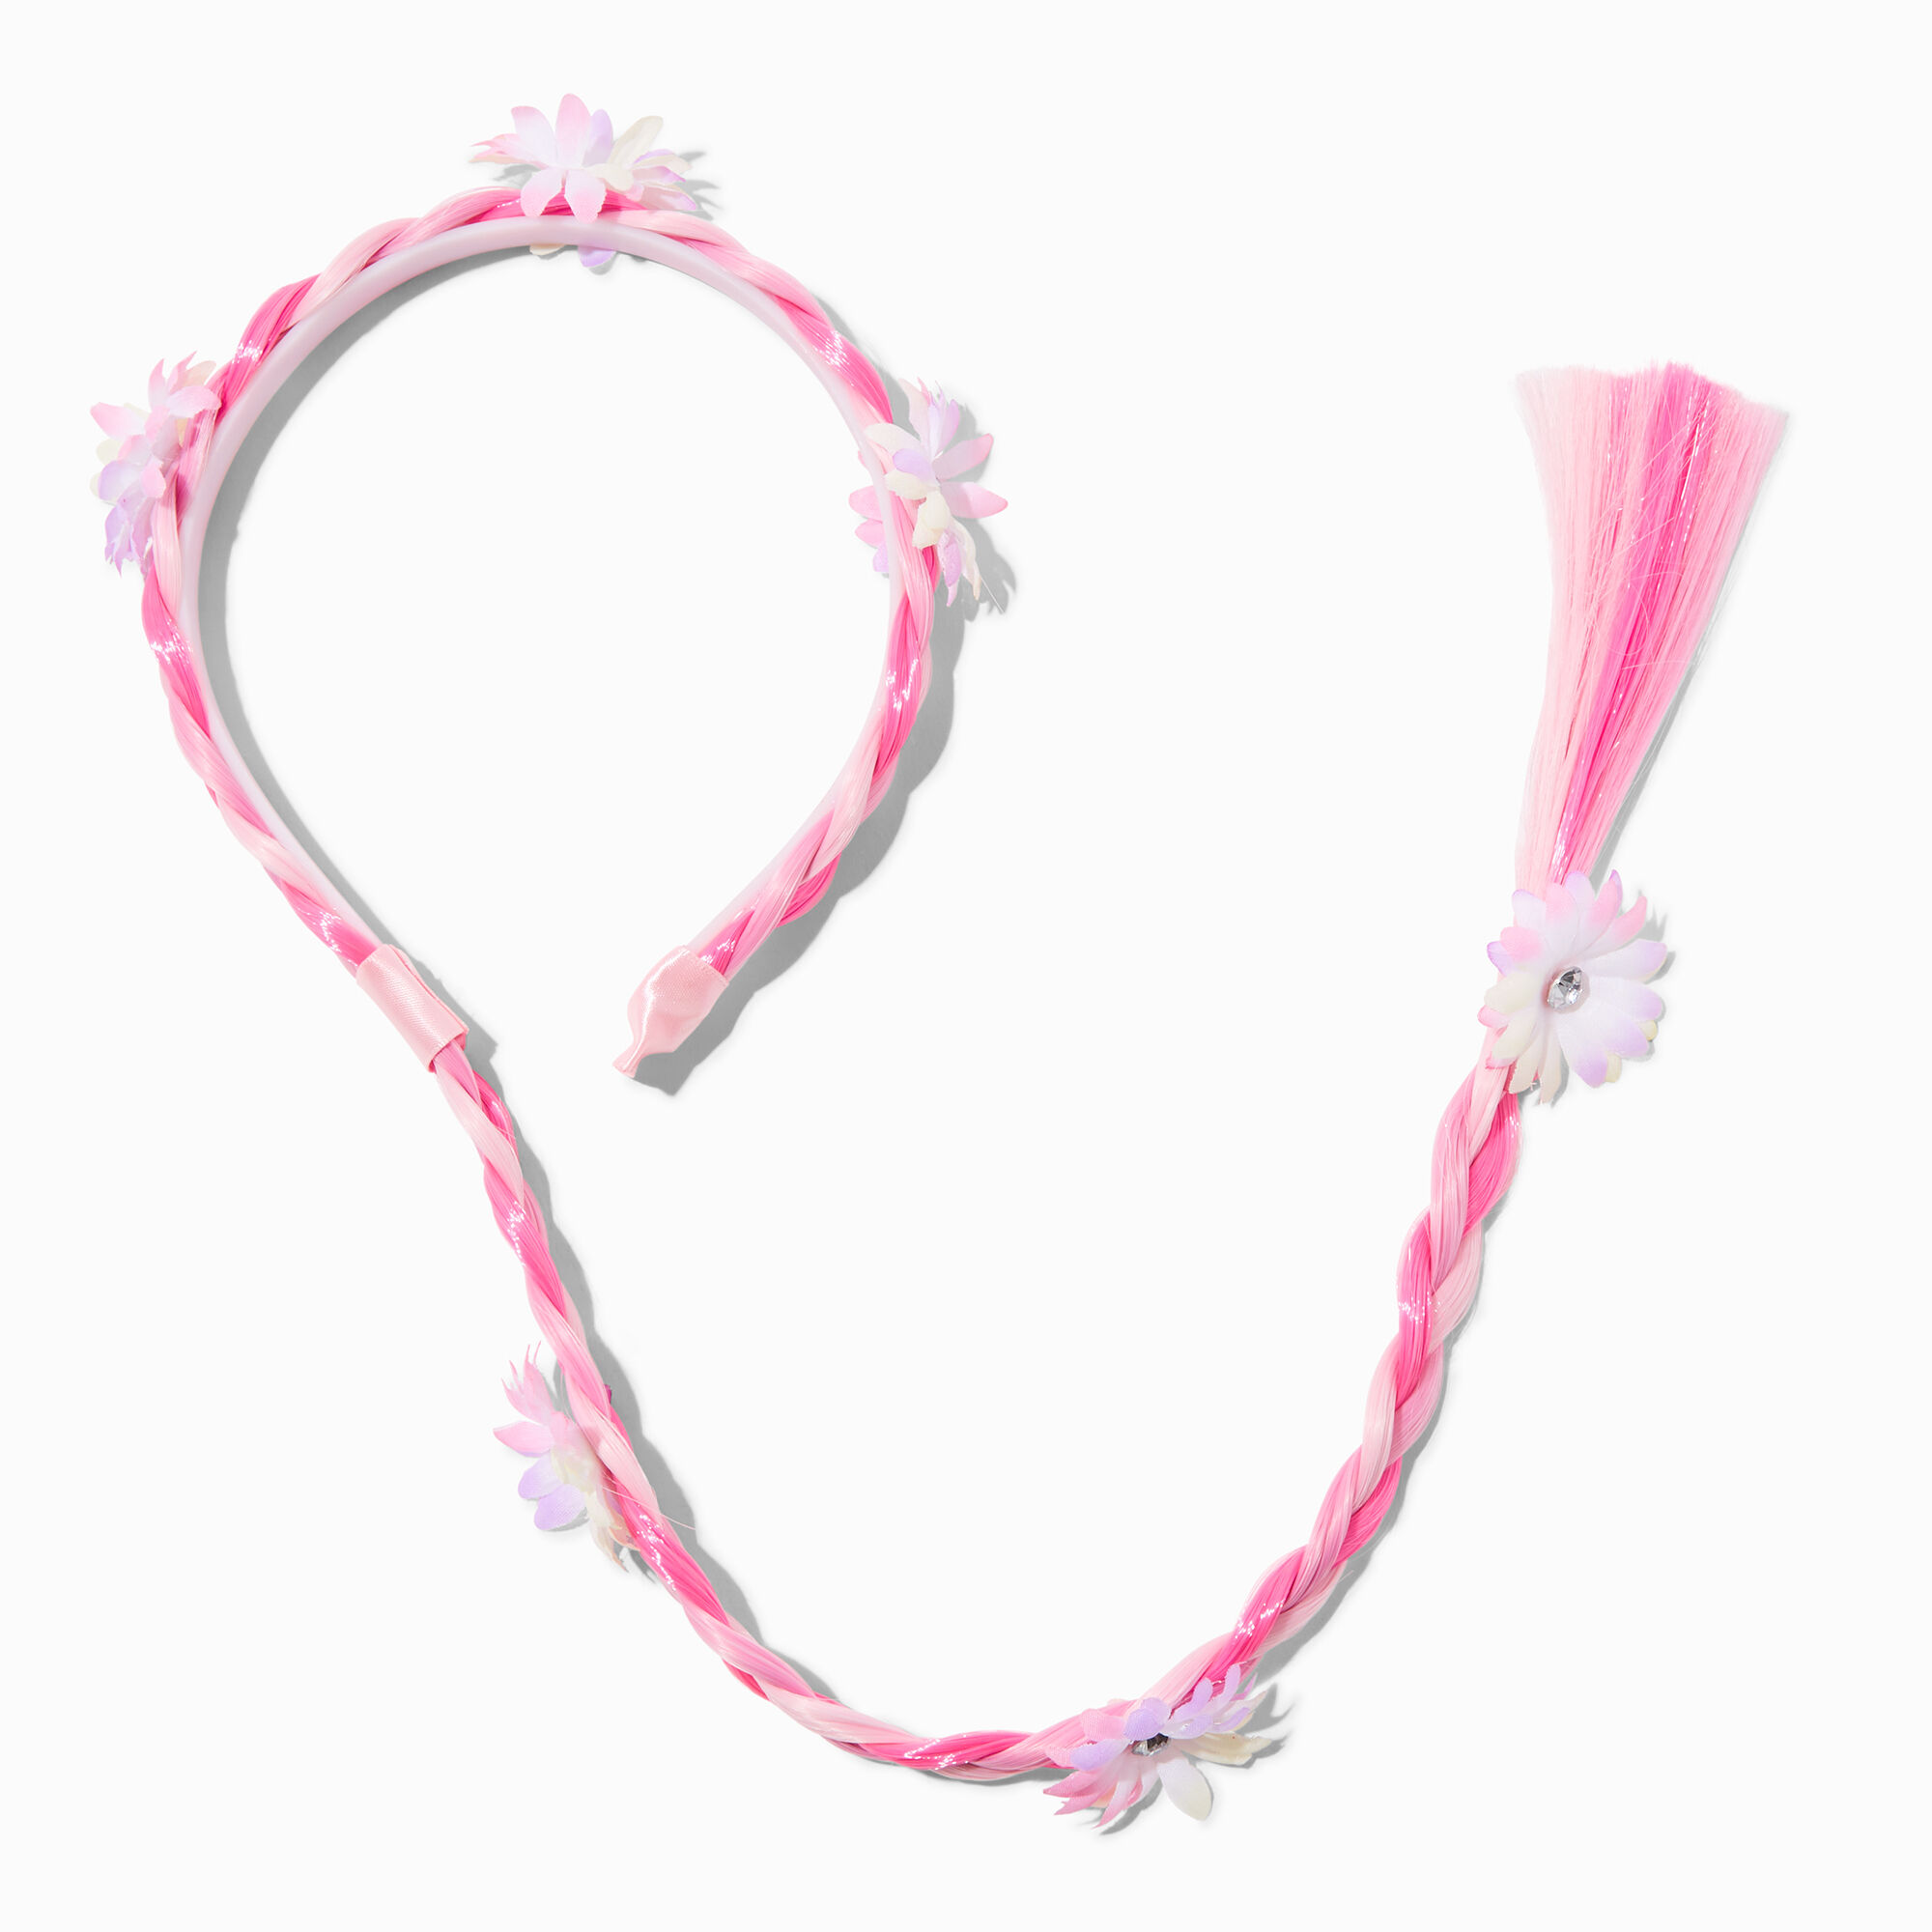 View Claires Club Flower Braided Headband Pink information